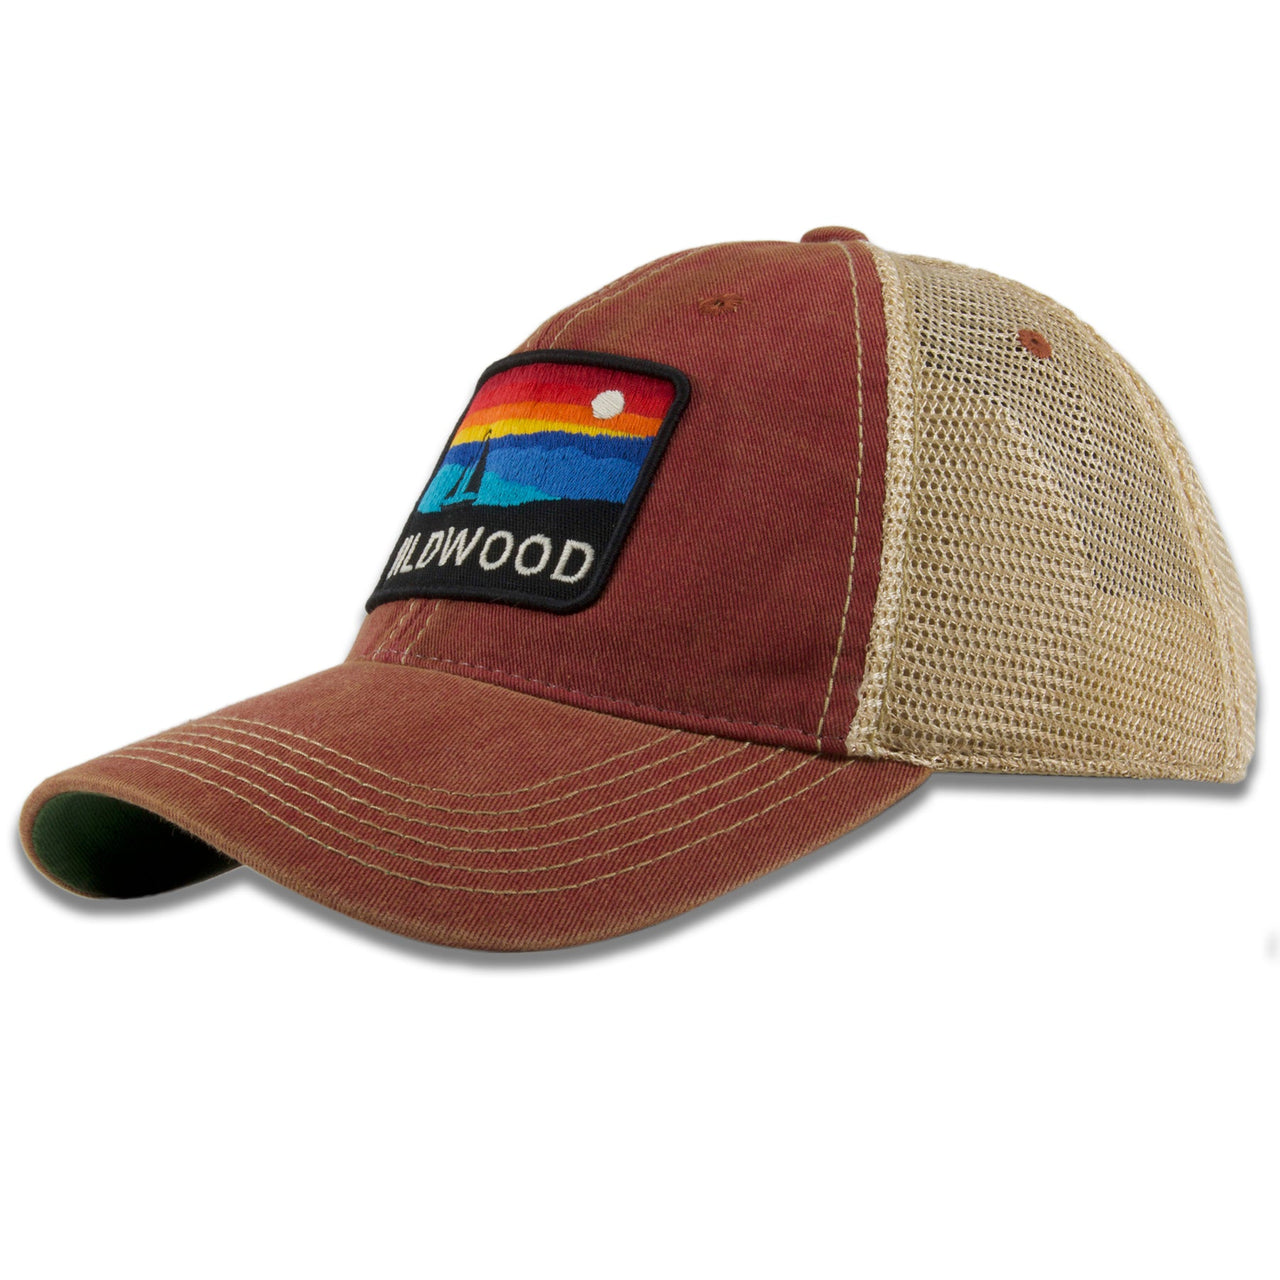 Wildwood "The Horizon" Cardinal / Khaki Mesh-Back Trucker Hat